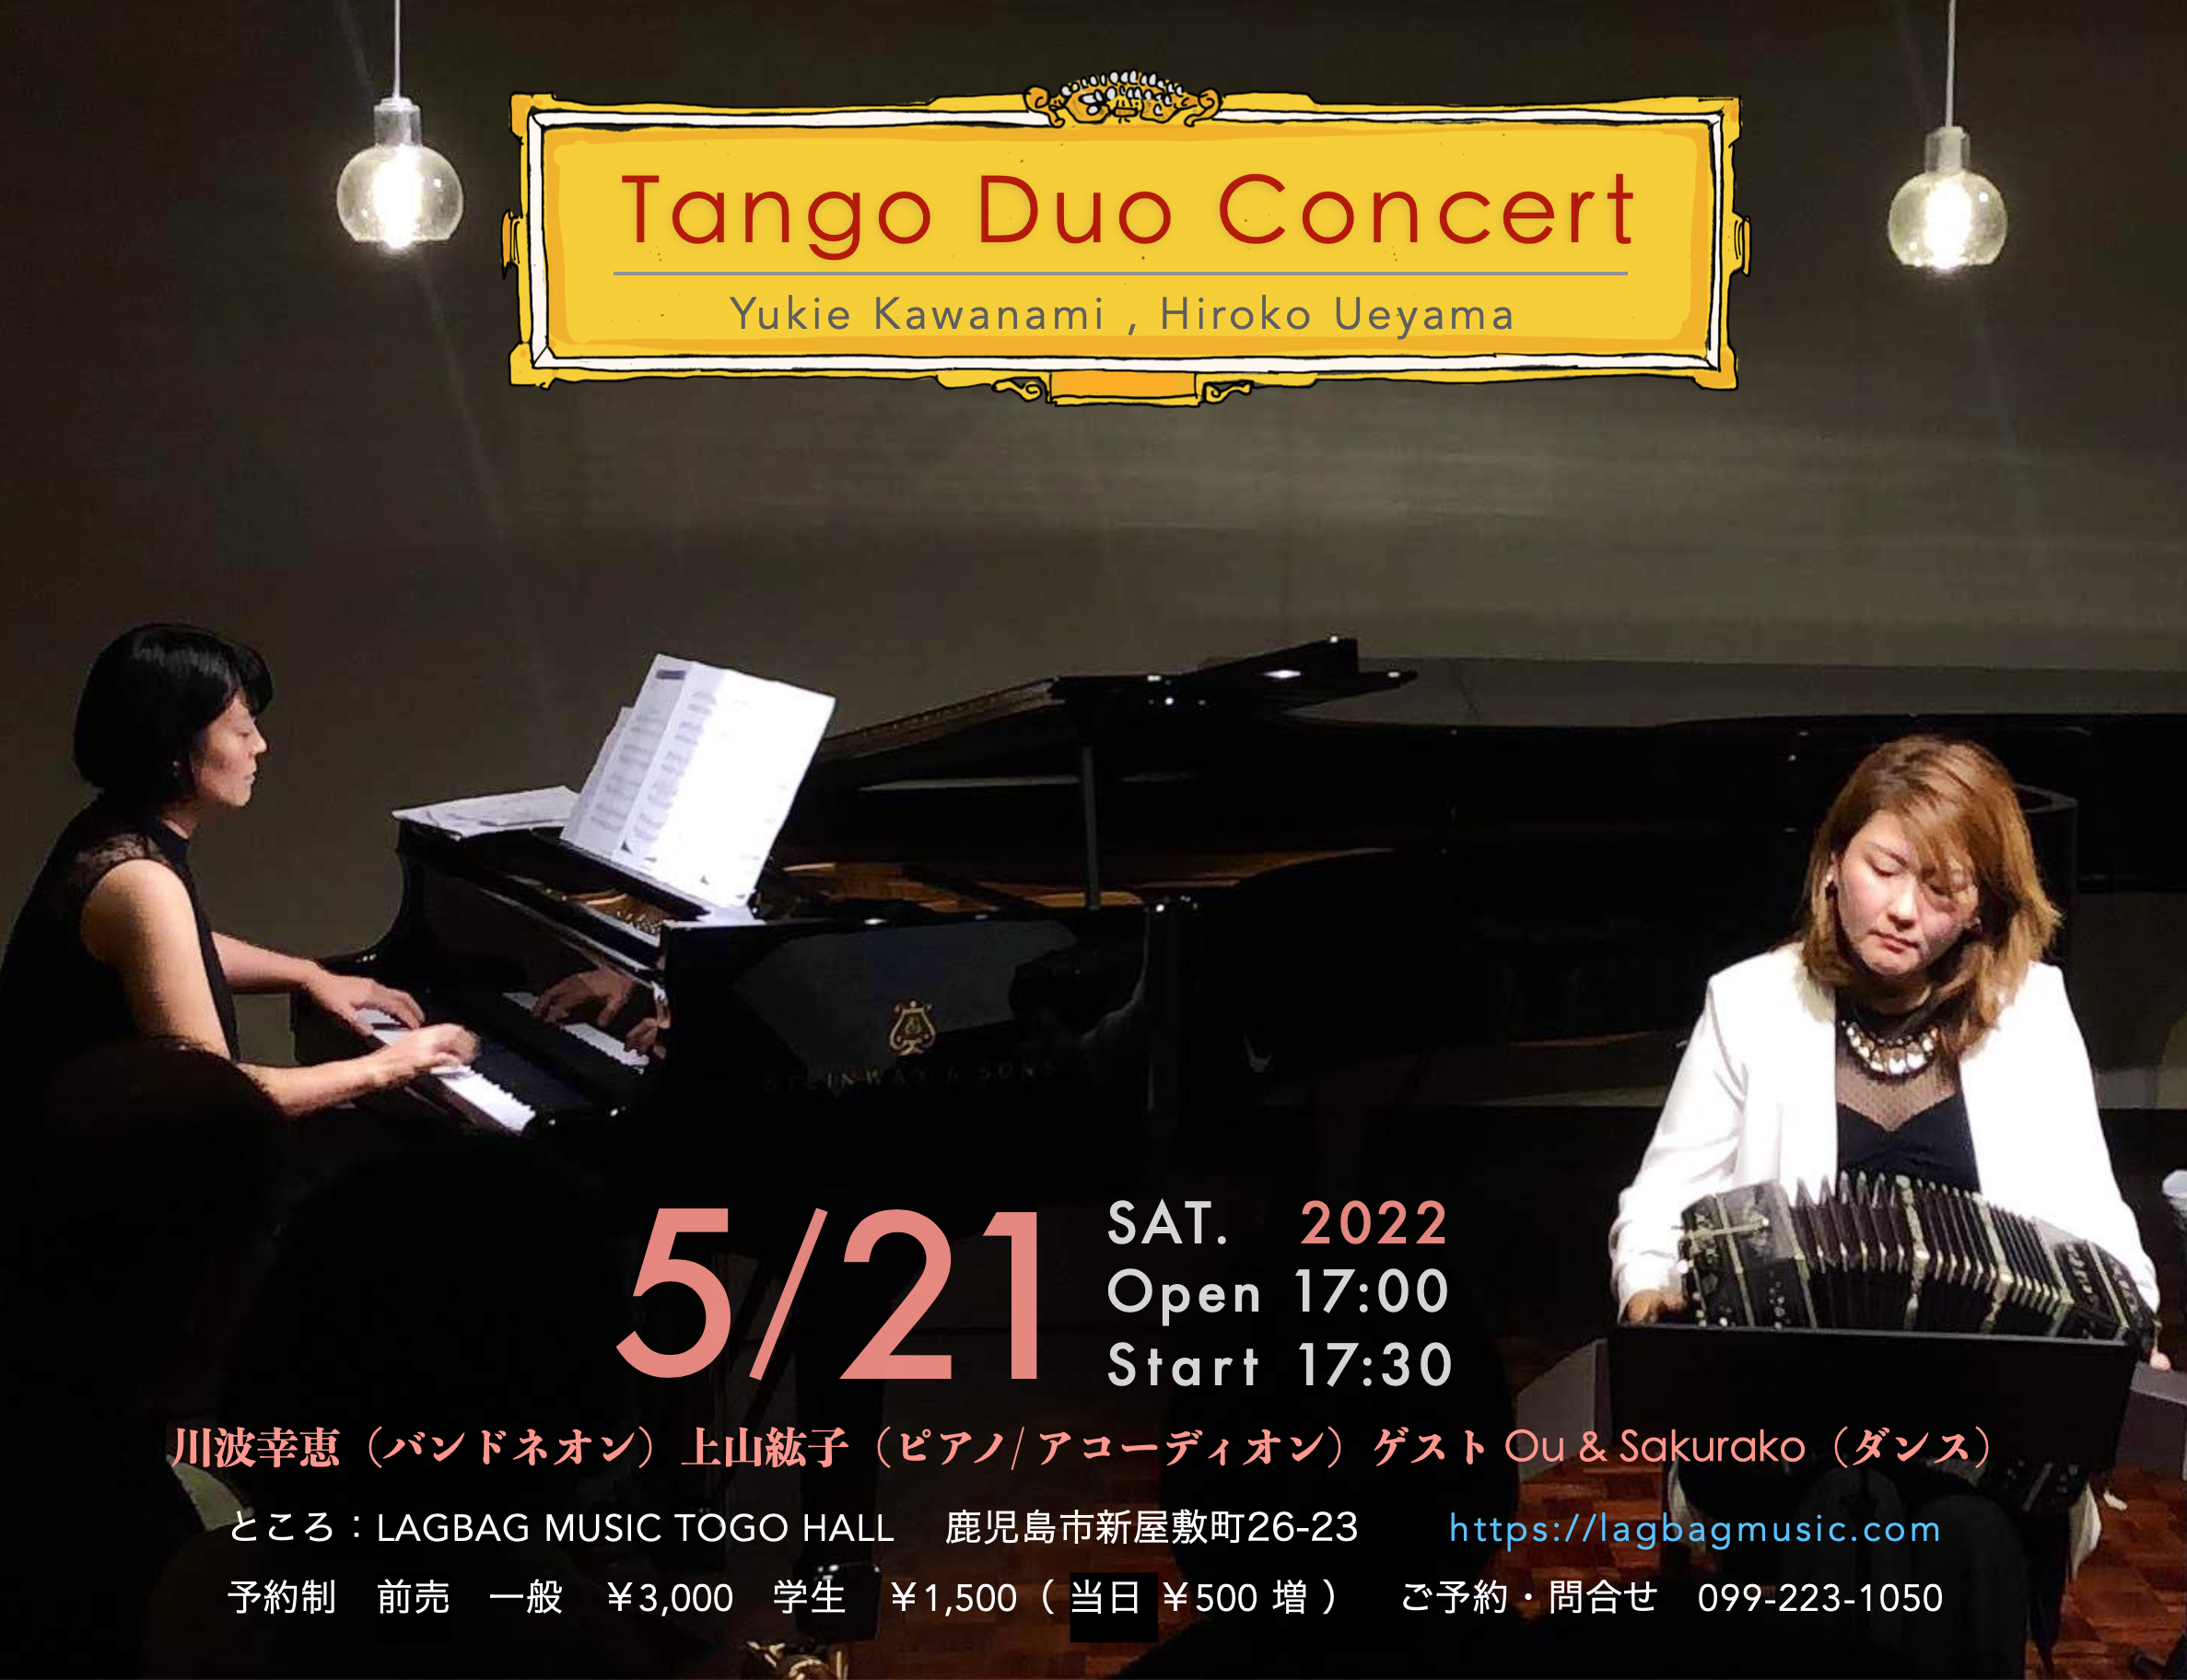 Tango Duo Concert 開催のお知らせ